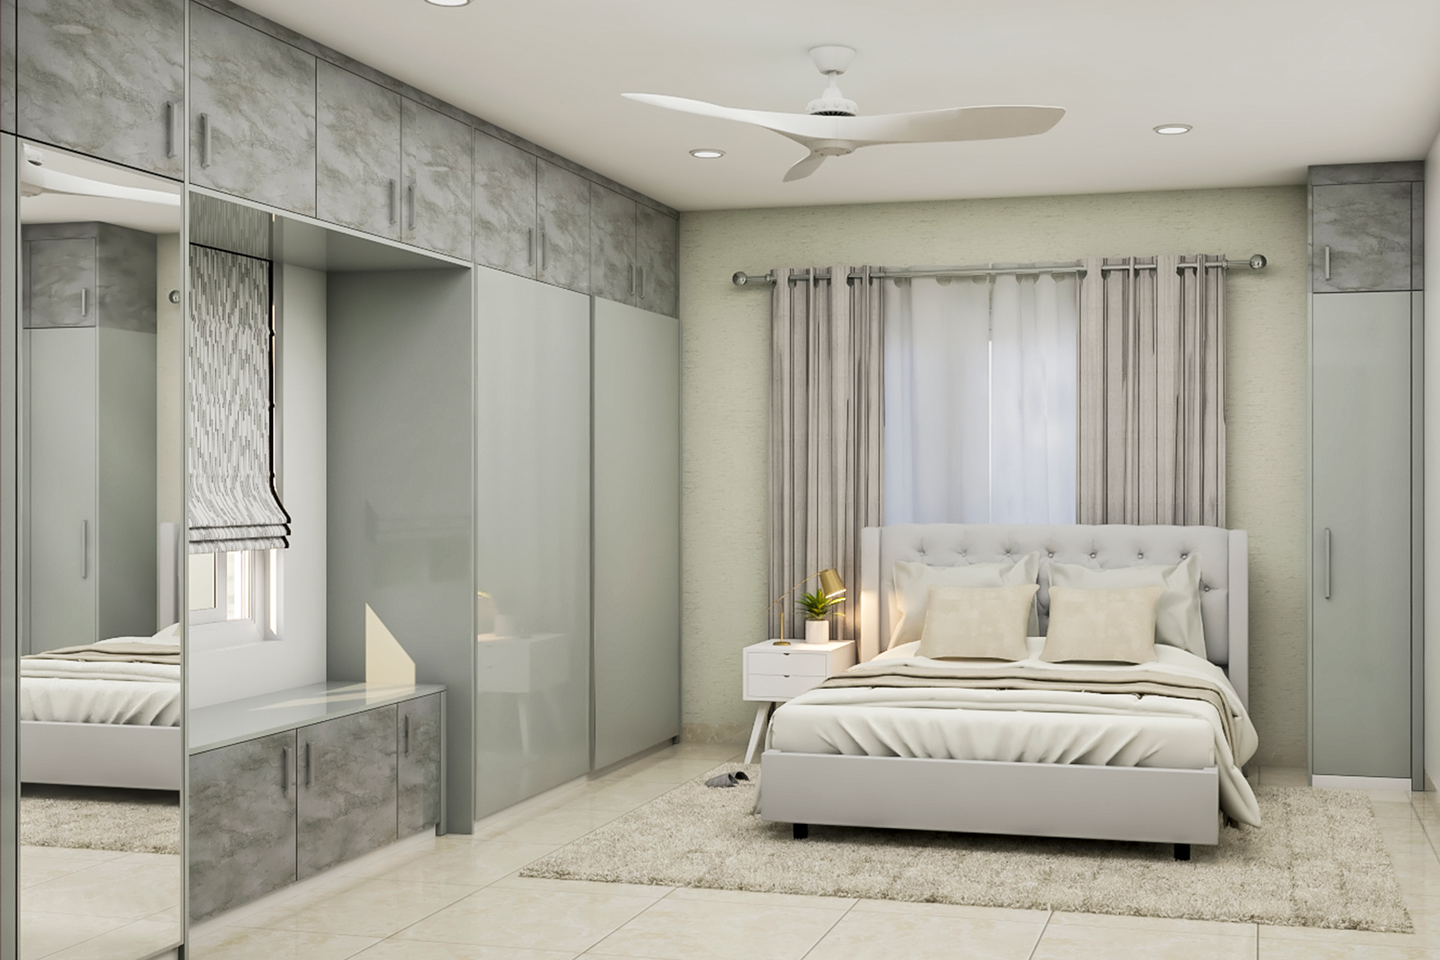 Contemporary Master Bedroom Design In Grey And Beige - Livspace